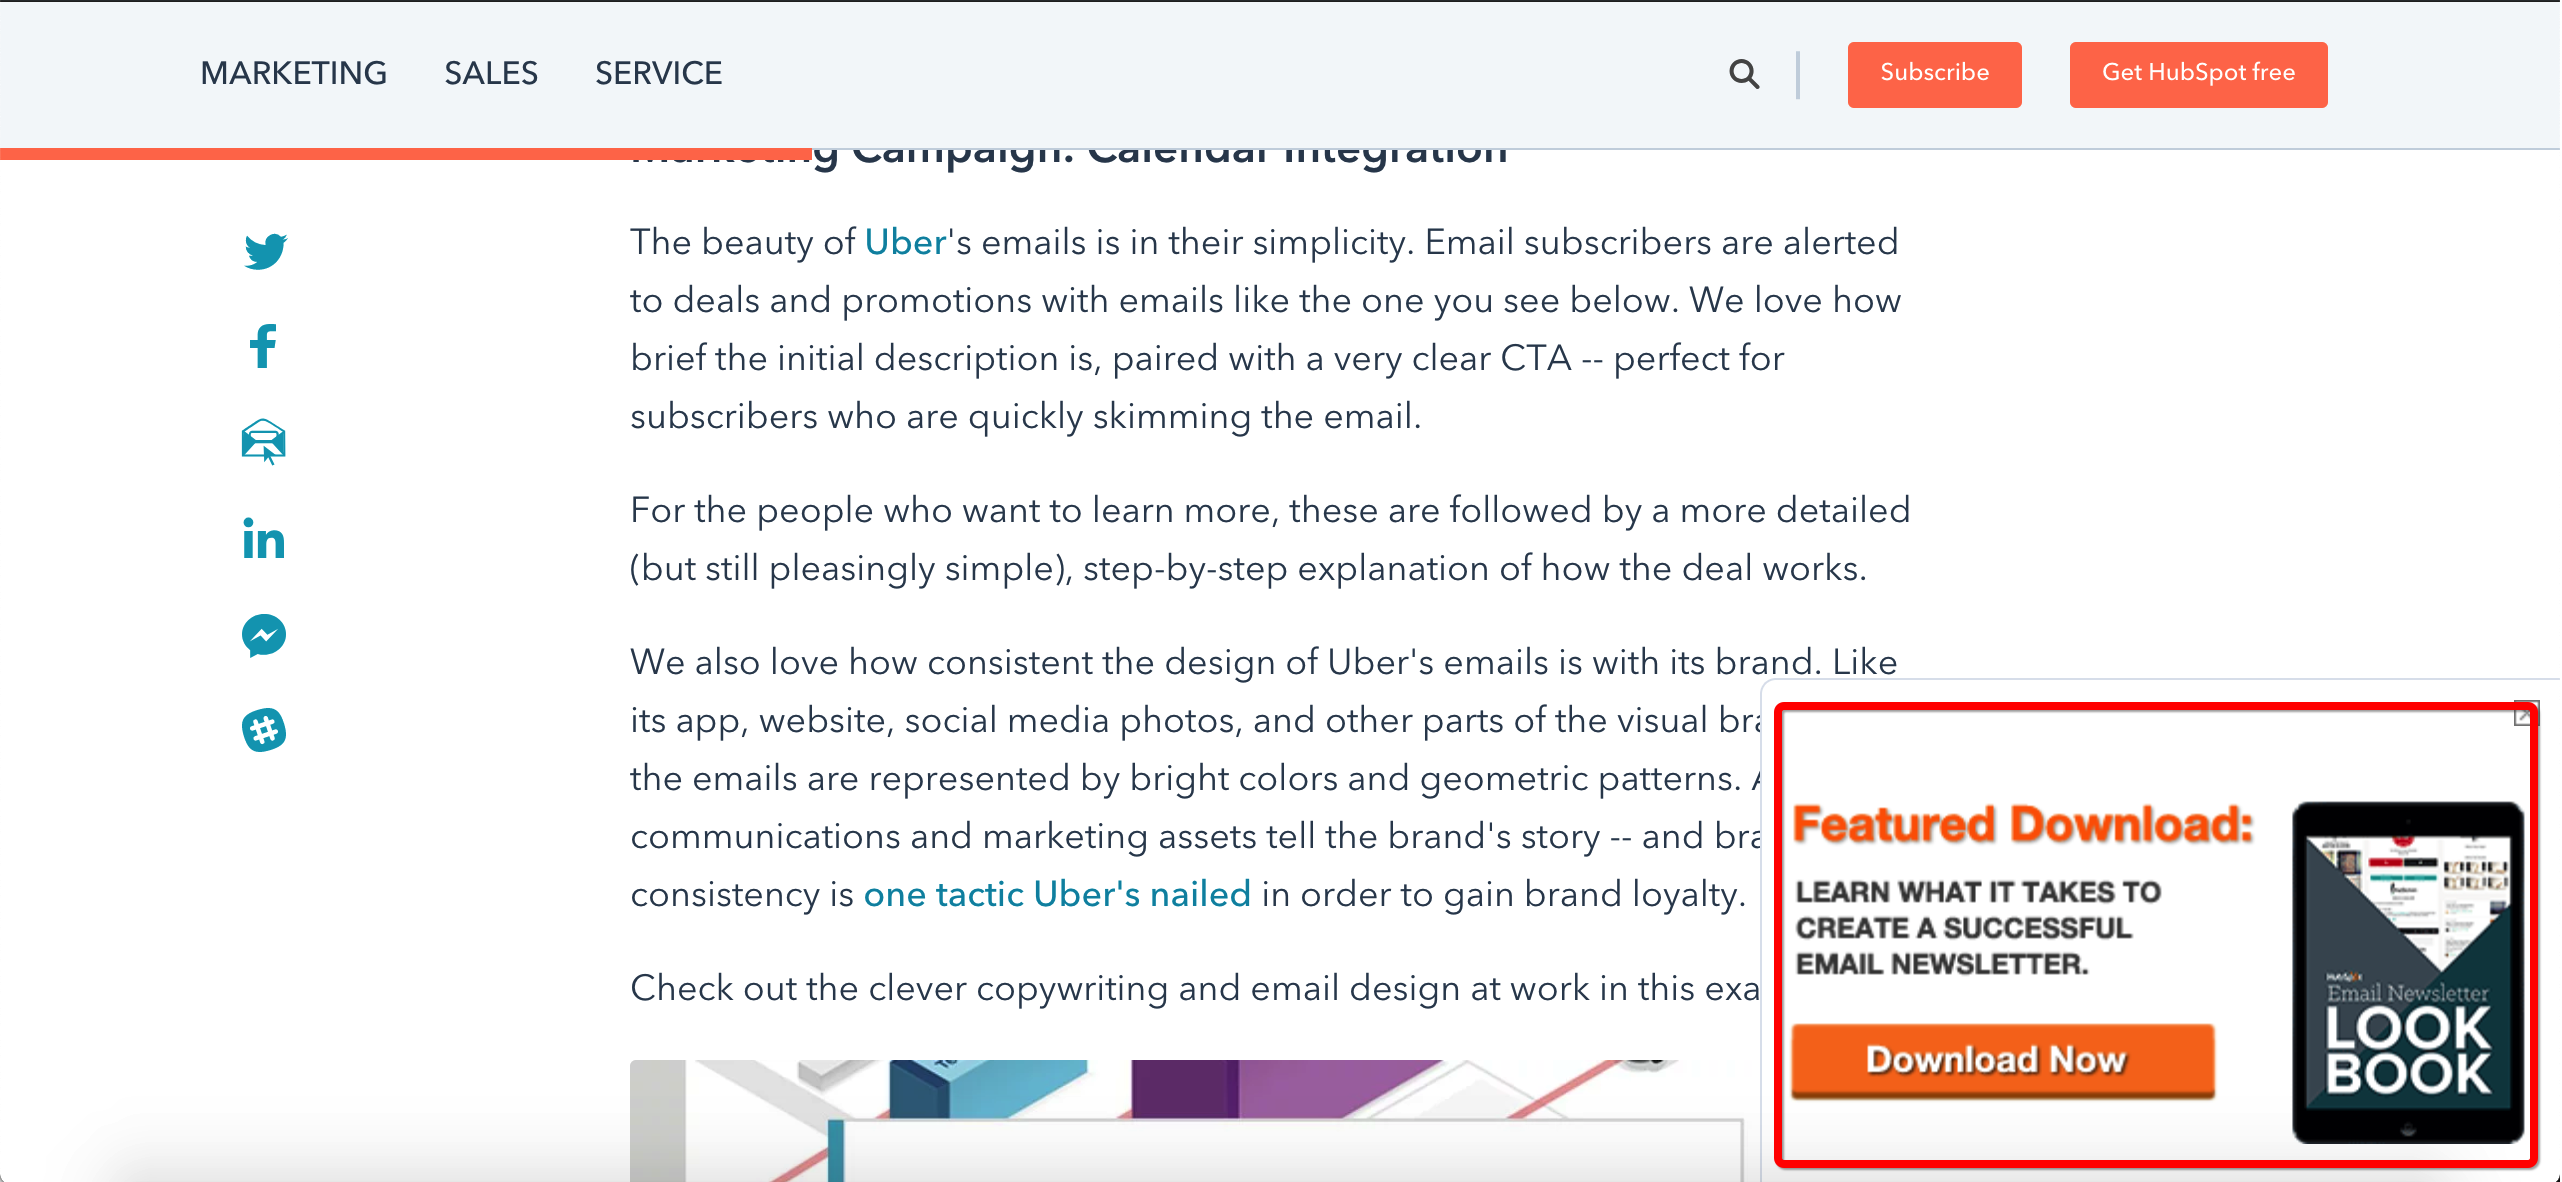 ways to grow B2B email marketing lists - whitepaper